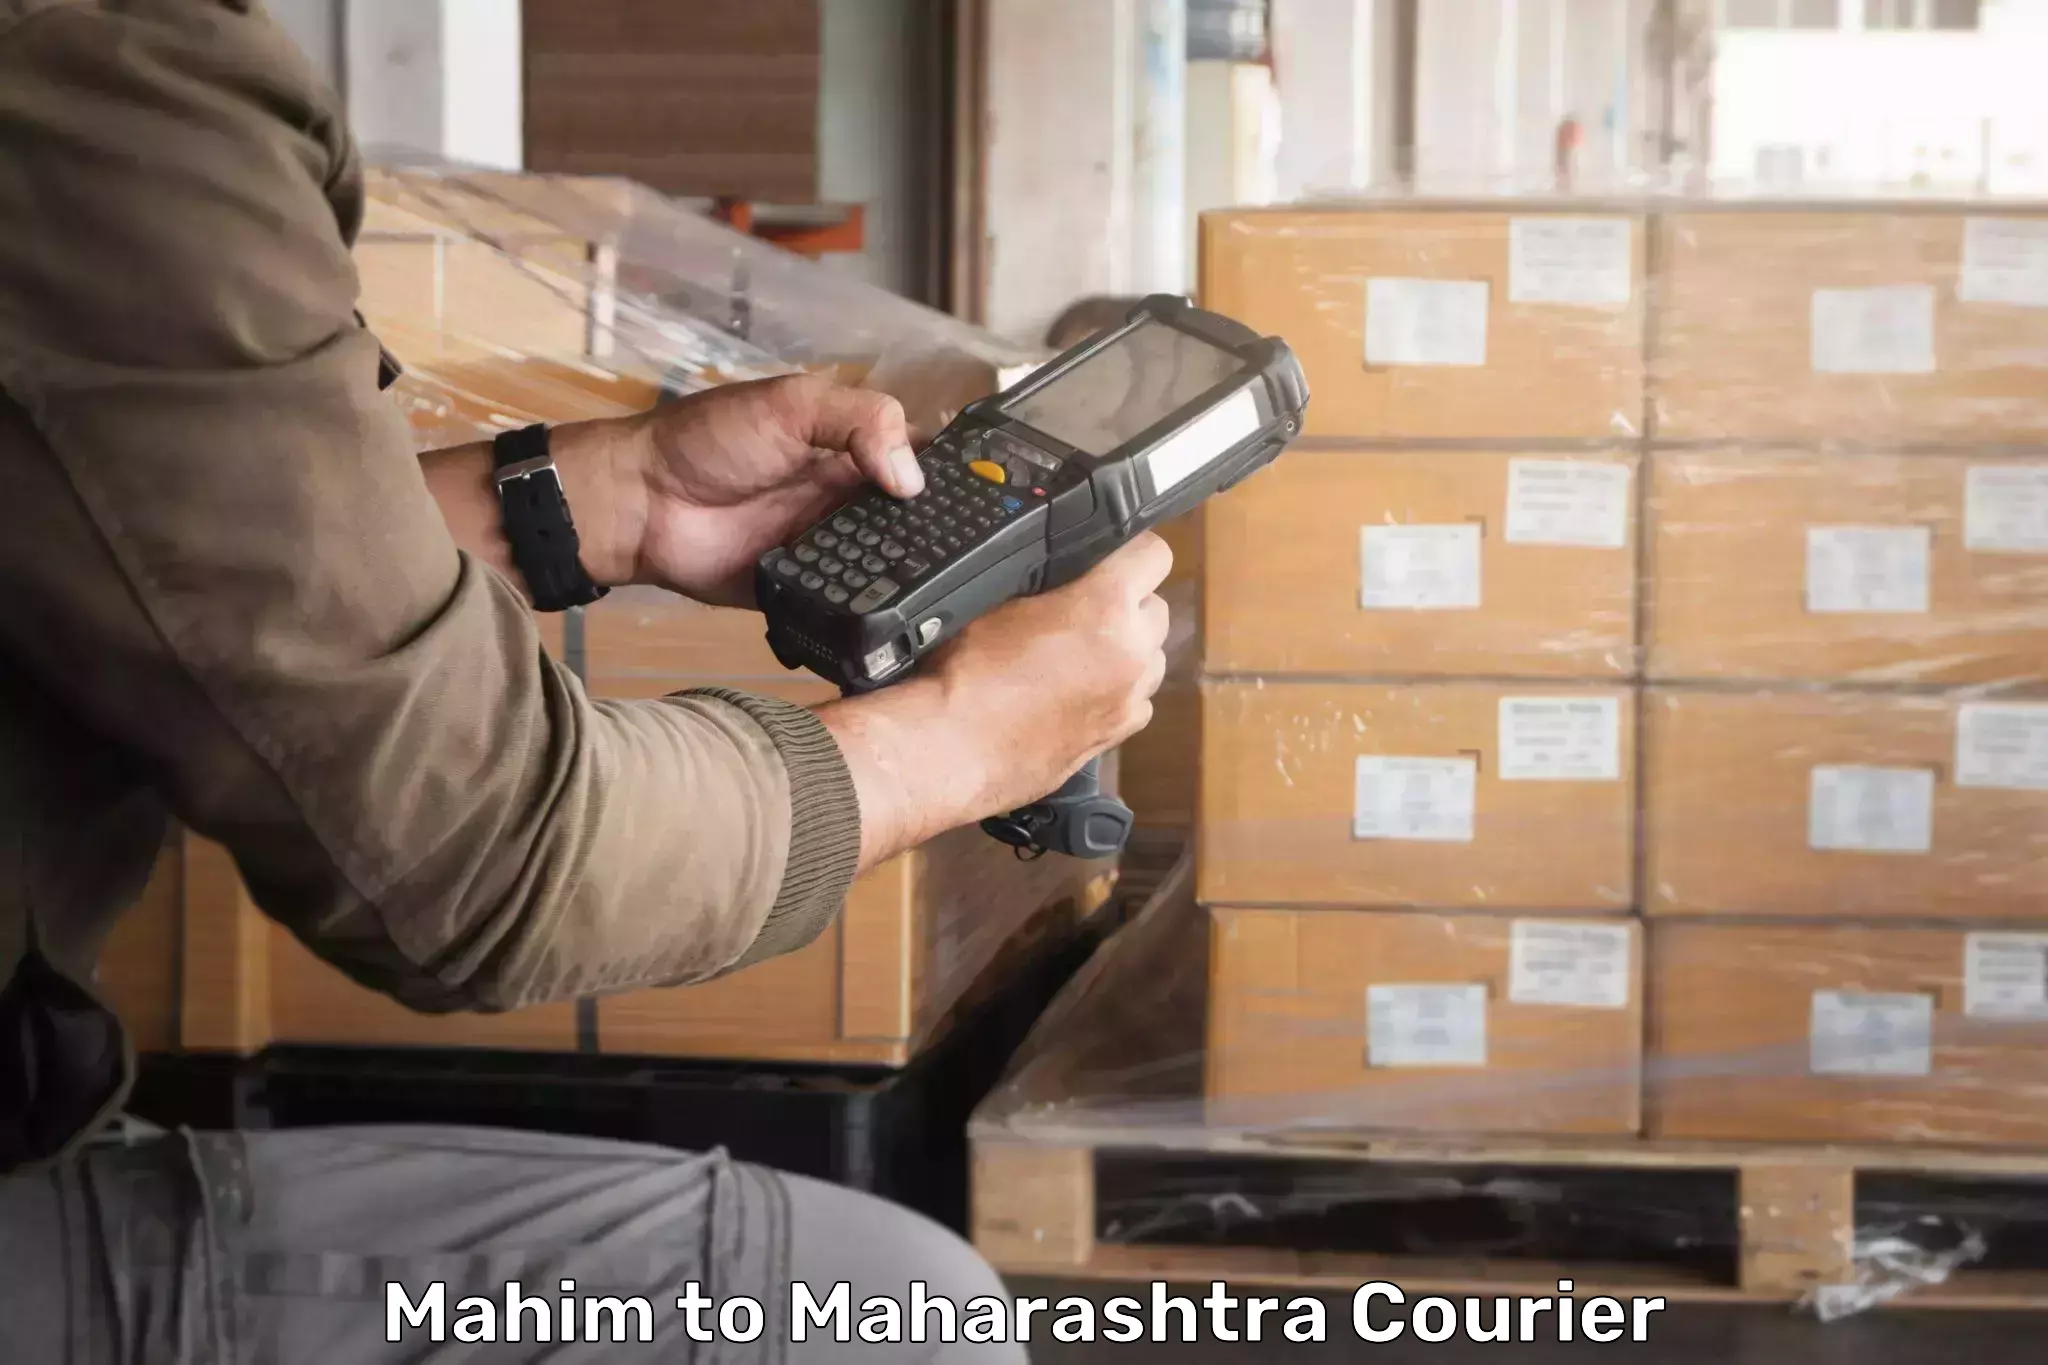 Courier service innovation Mahim to Ghatanji